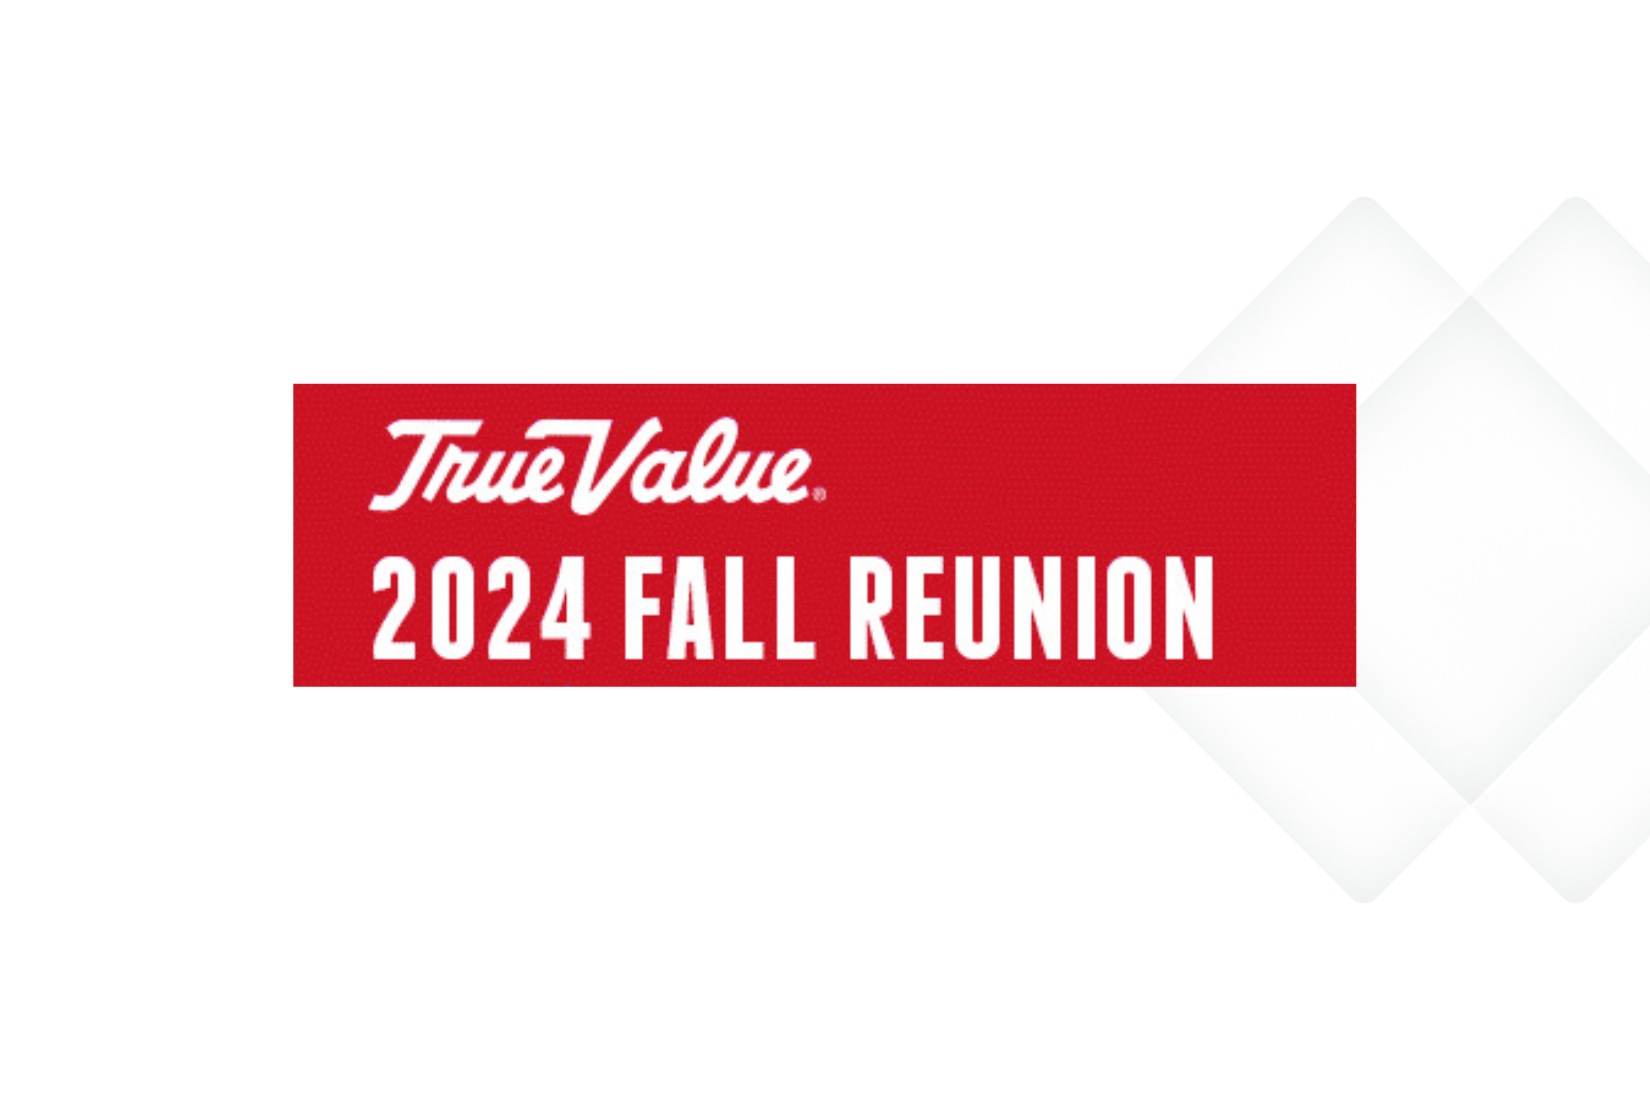 True value 2024 Fall Reunion - VusionGroup